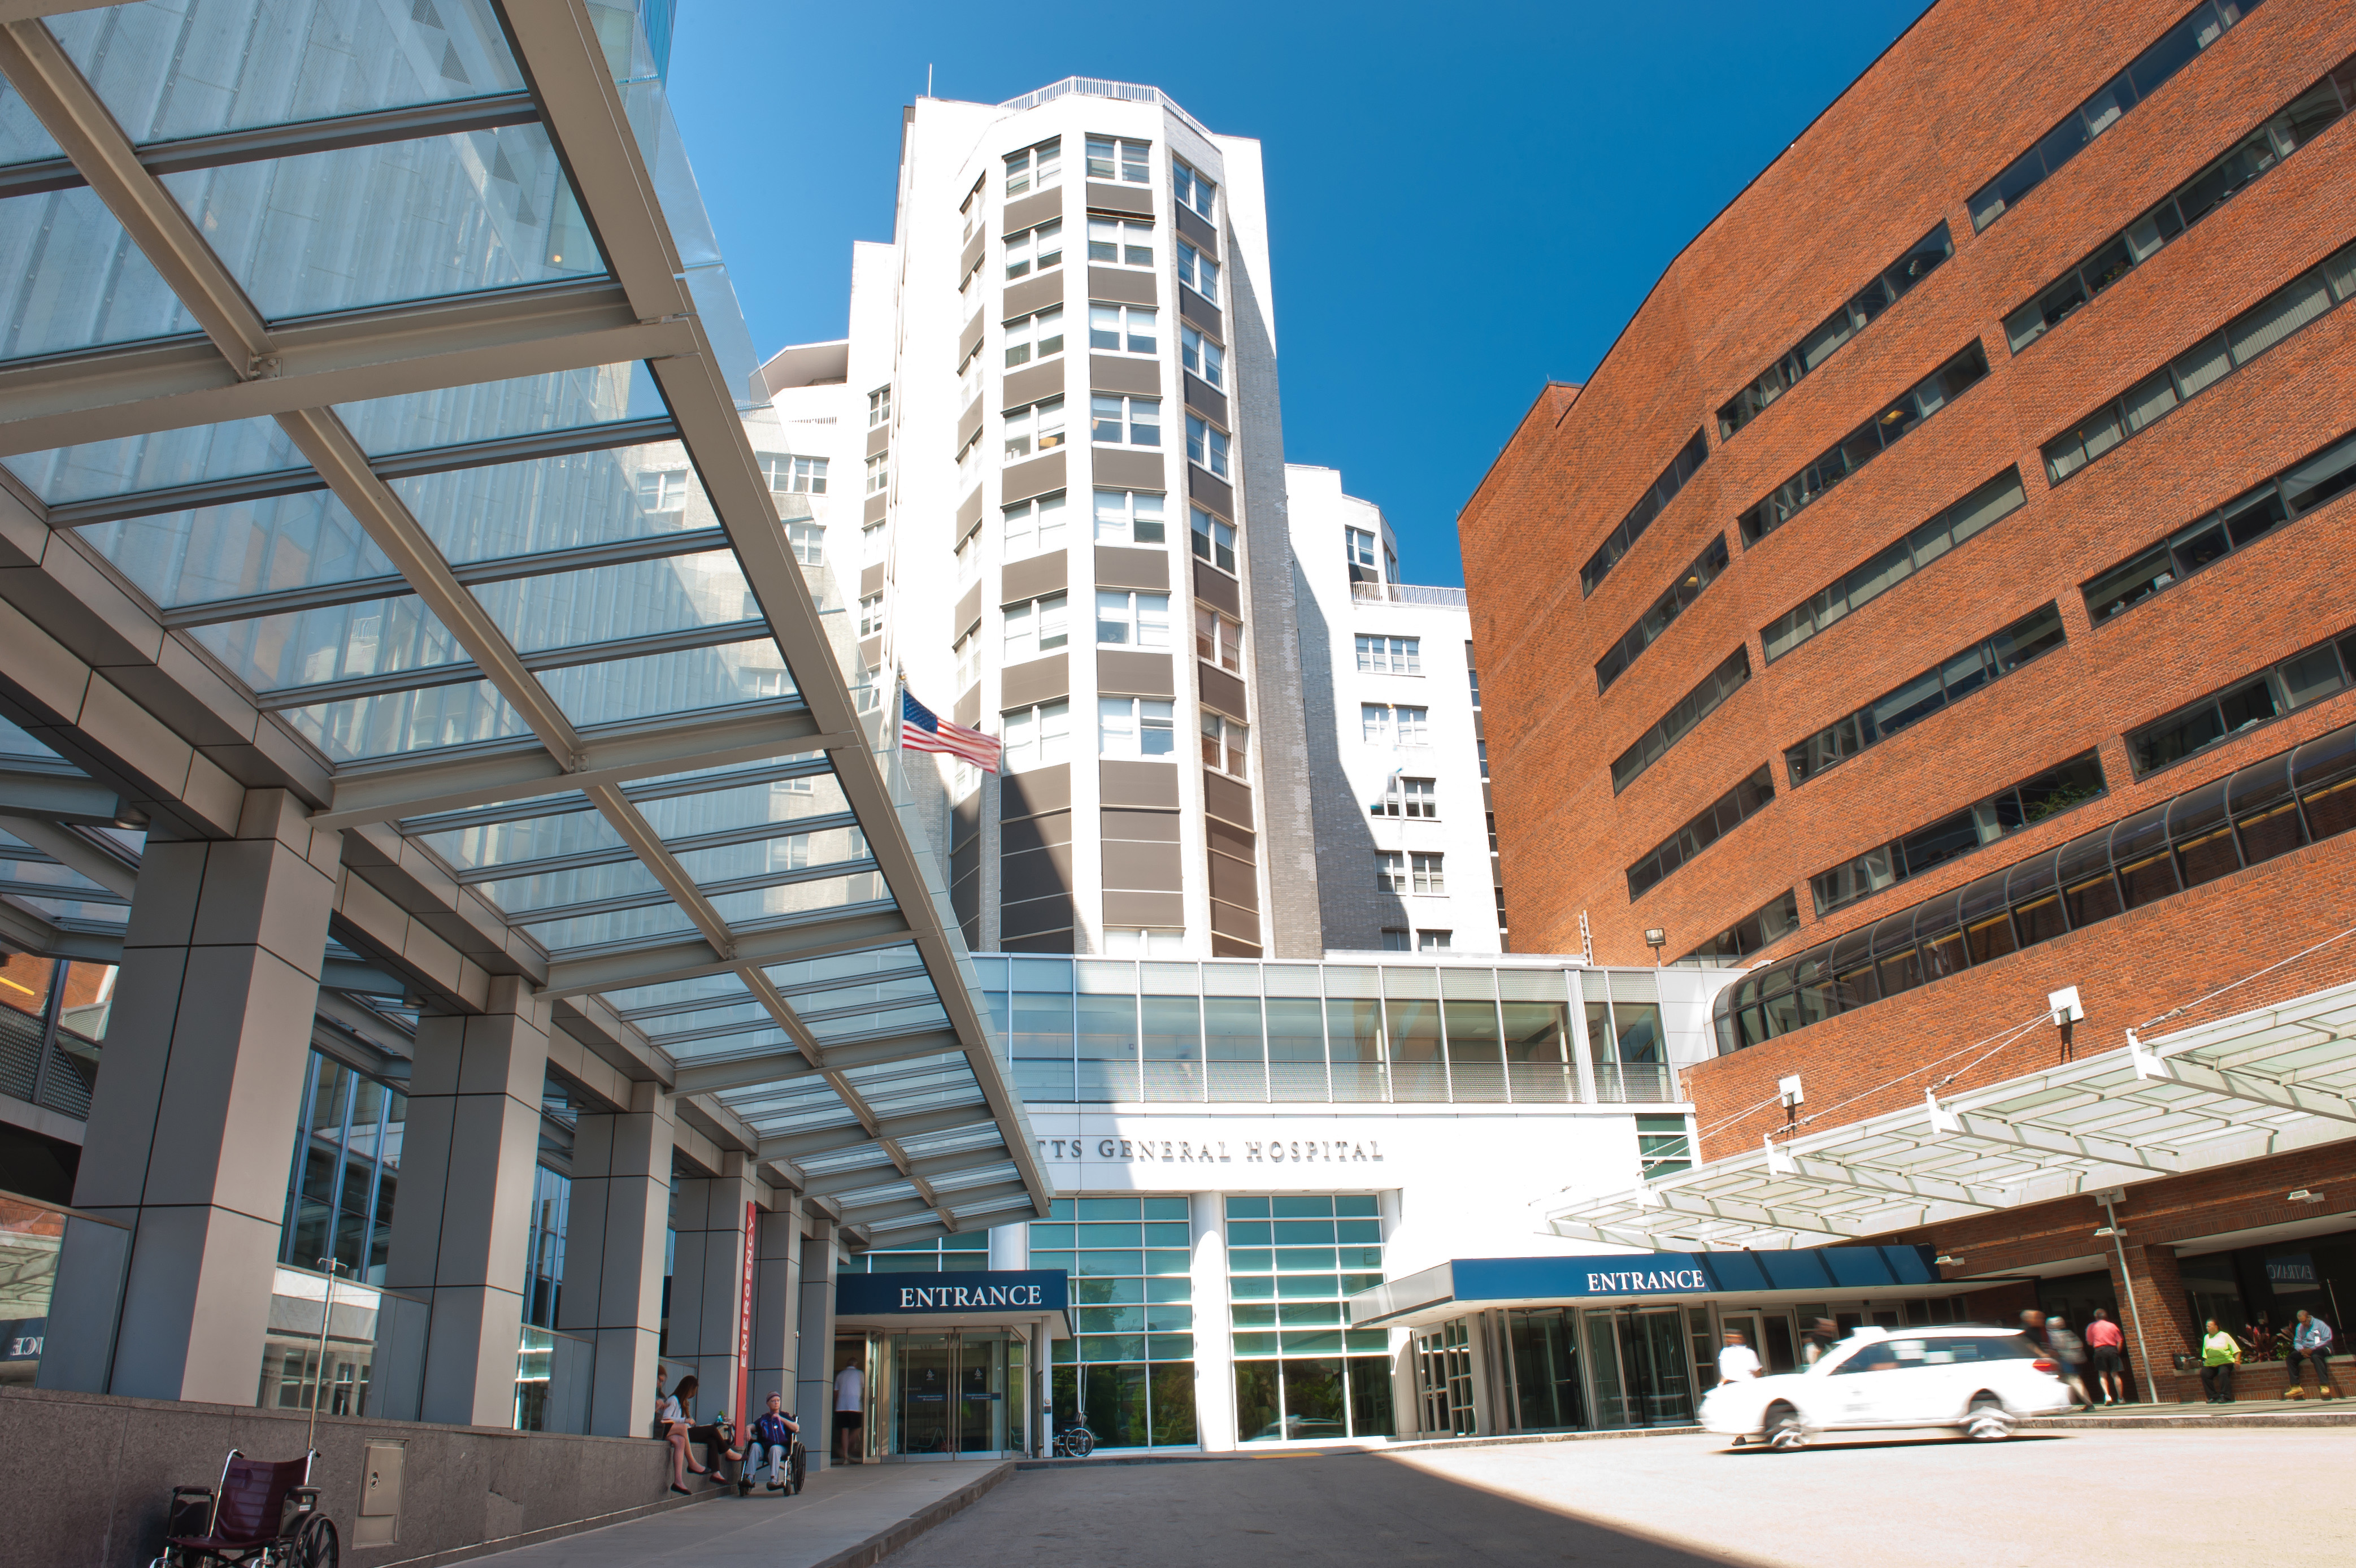 Jobs at mass general hospital boston ma